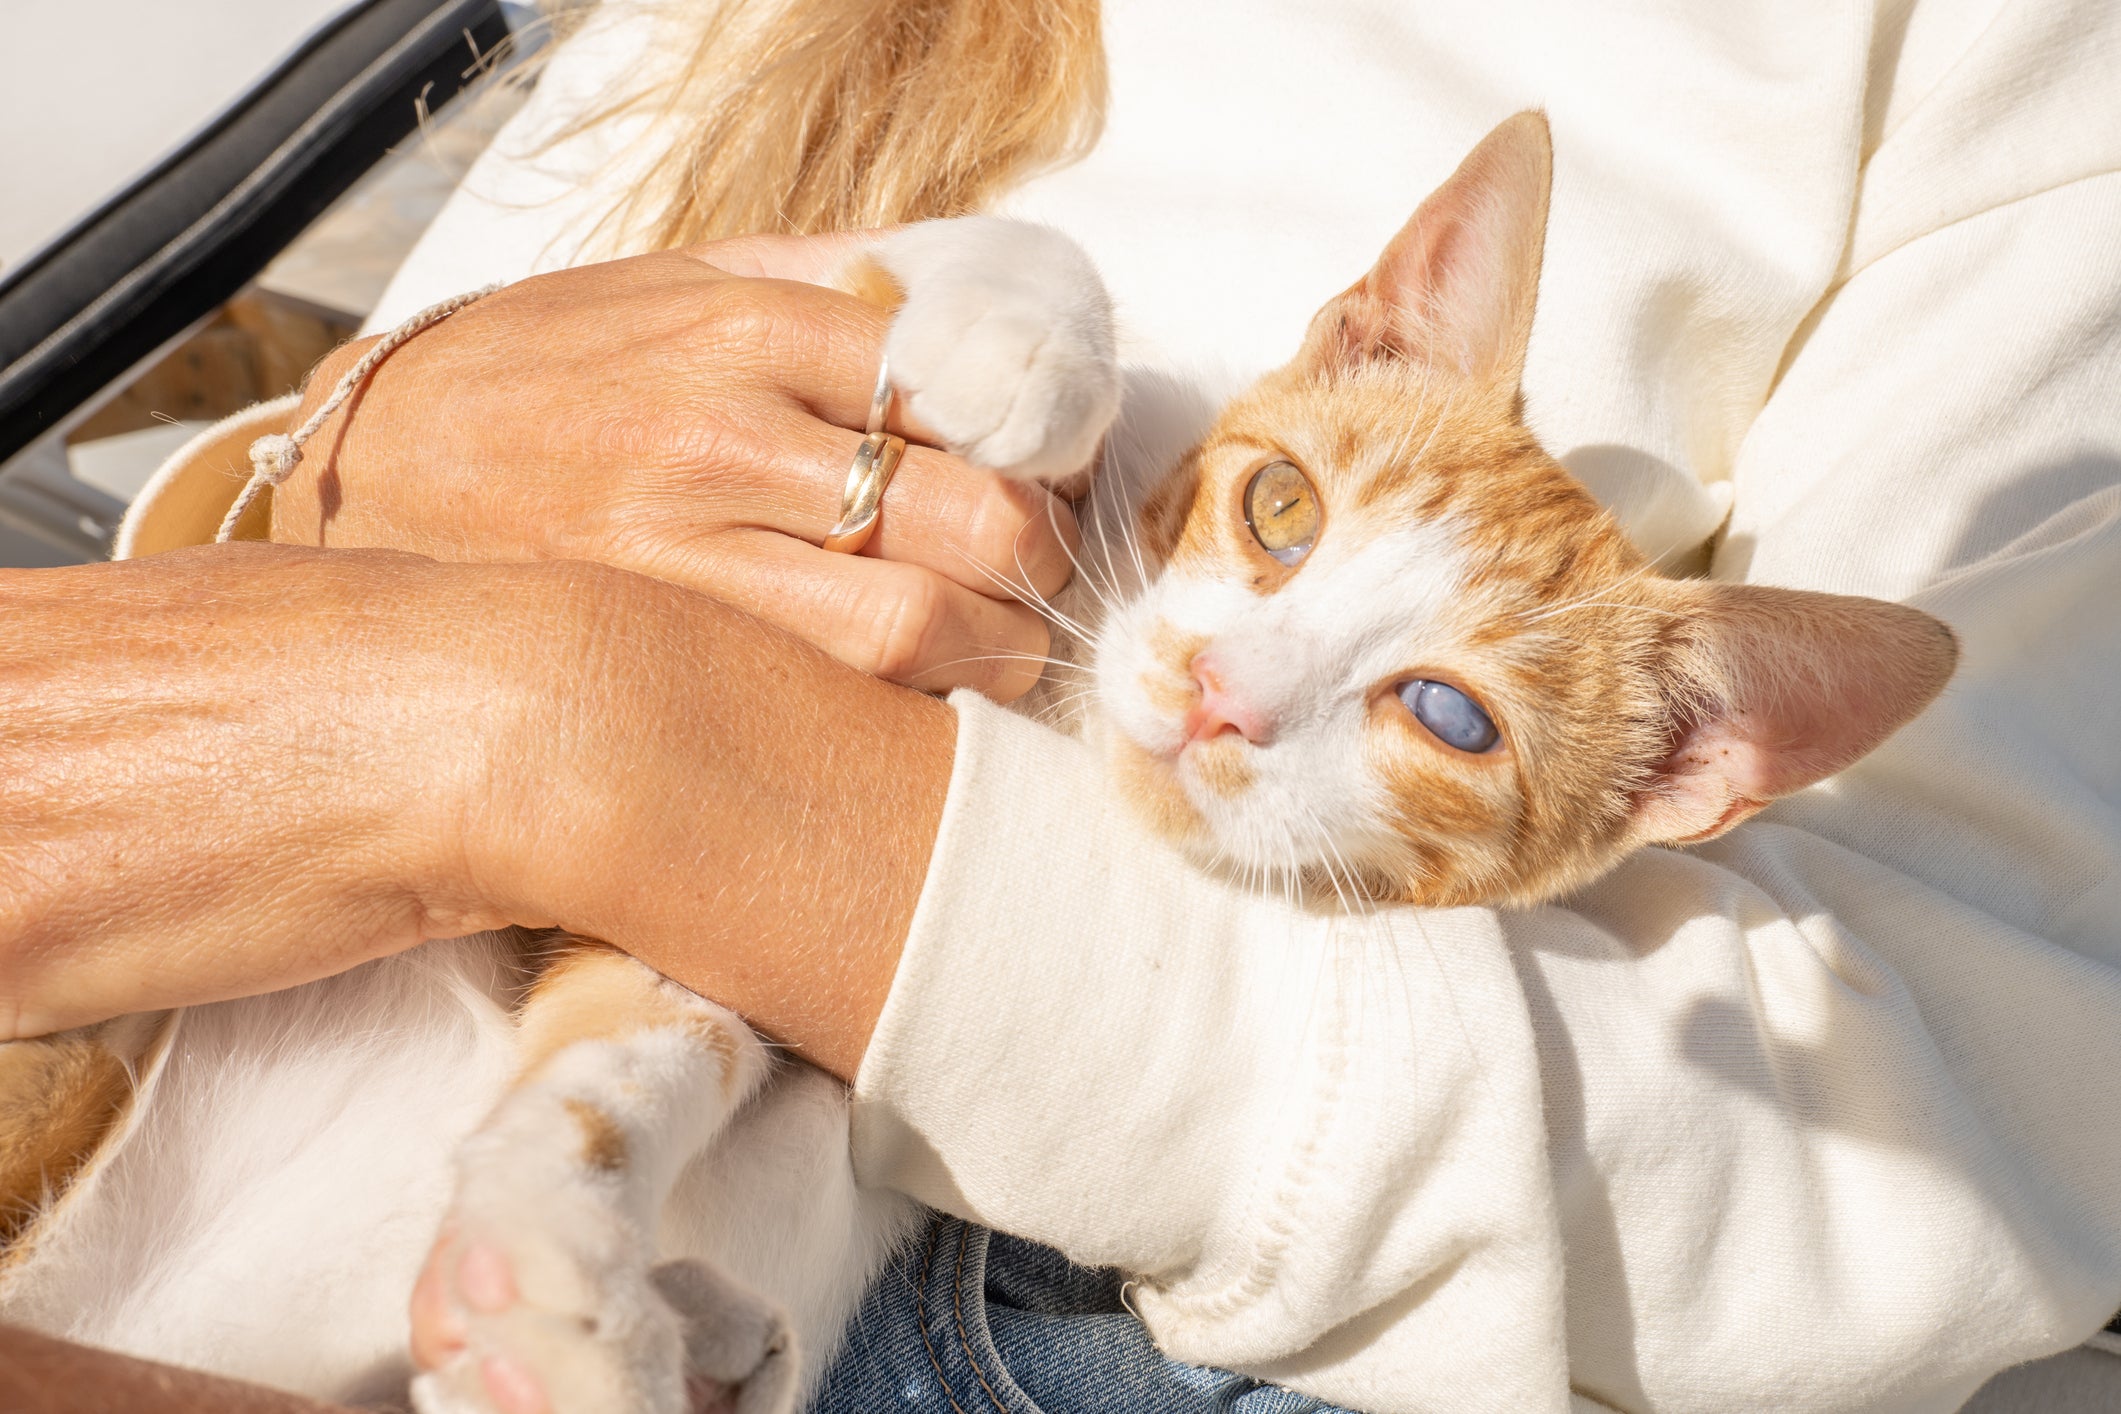 Tutora segurando gato laranja e branco cego no colo